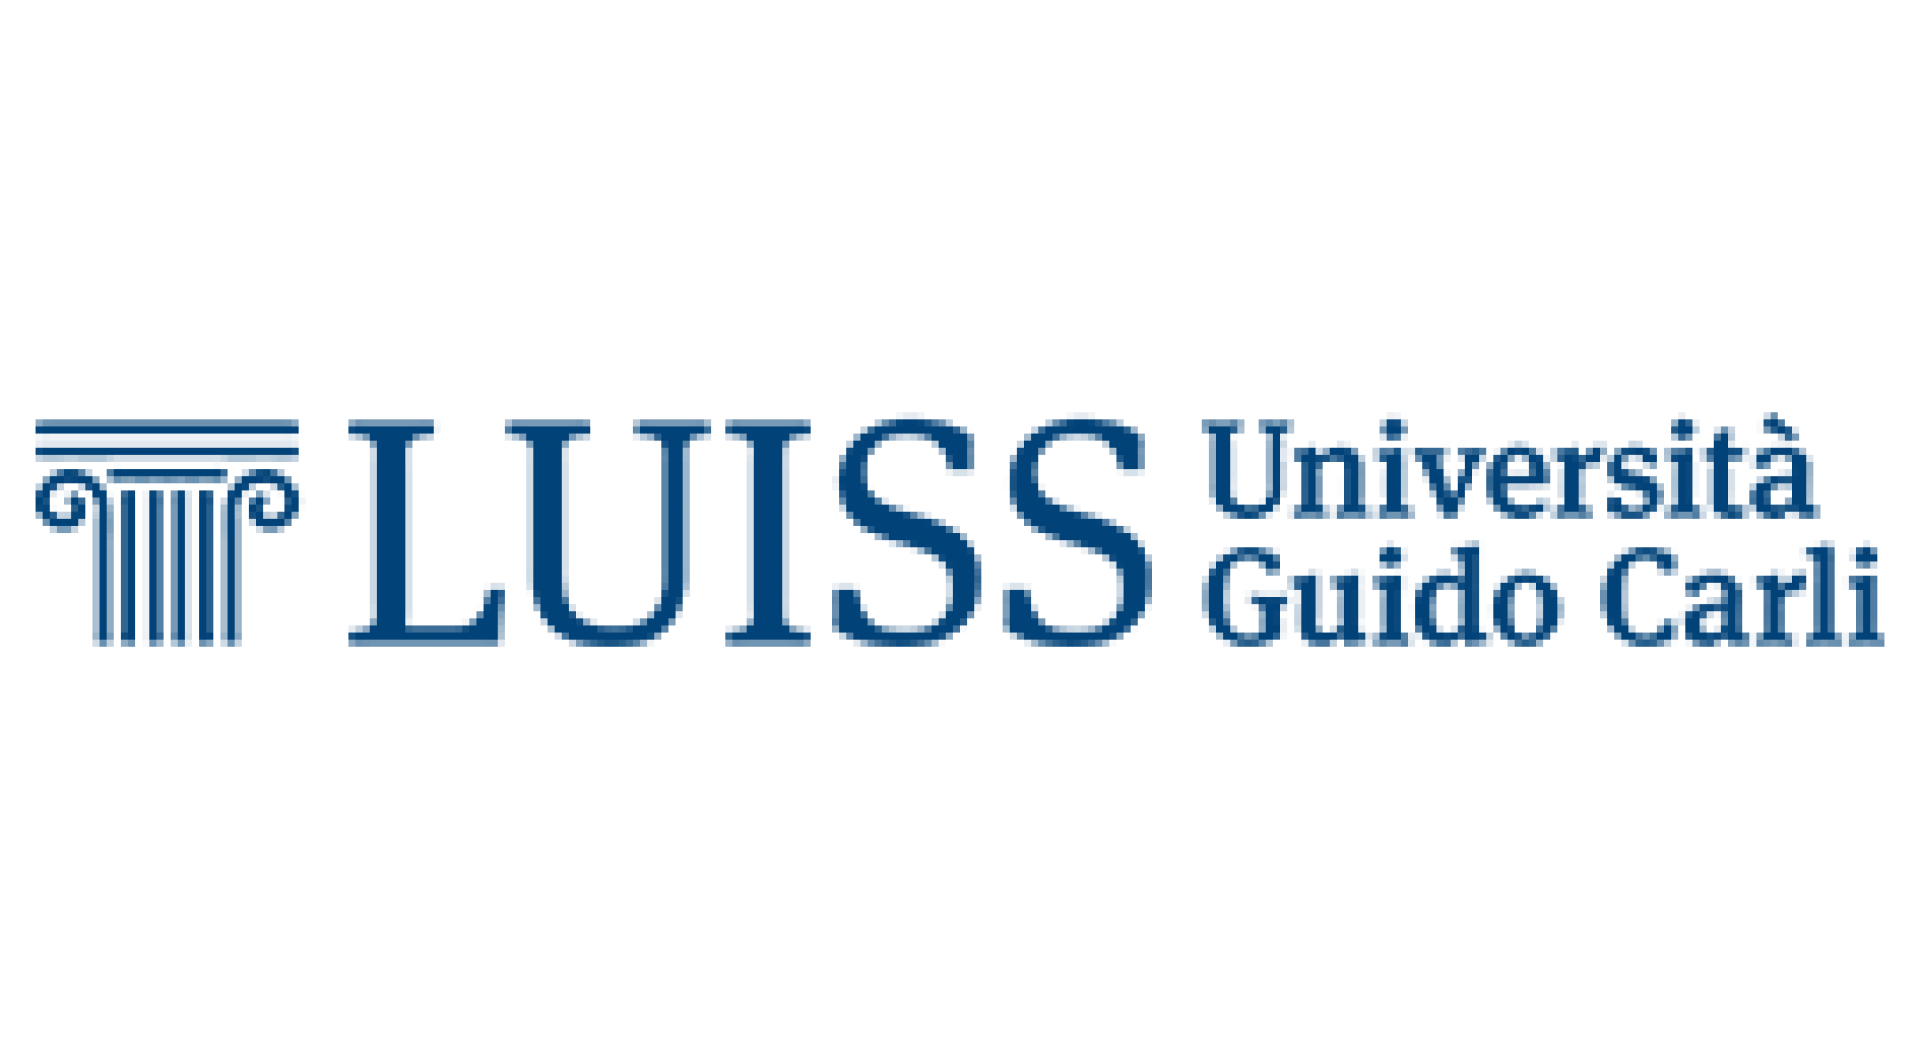 LUISS University